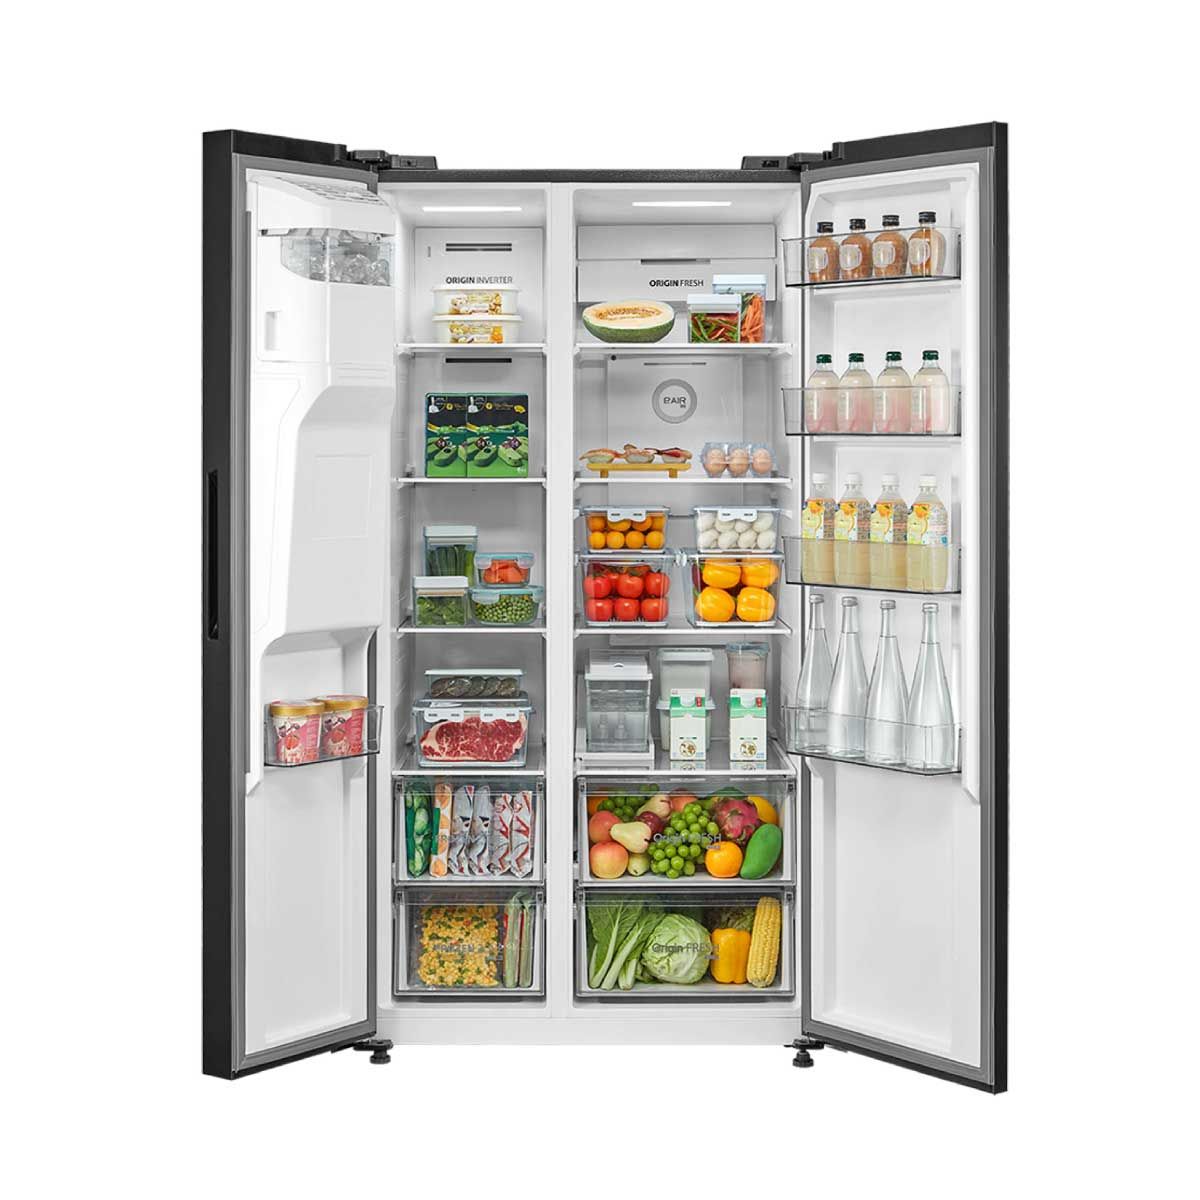 TOSHIBA ตู้เย็น Side by Side 20 Q มีที่กดน้ำ Wifi สีดำ รุ่น RS755WIAPGT